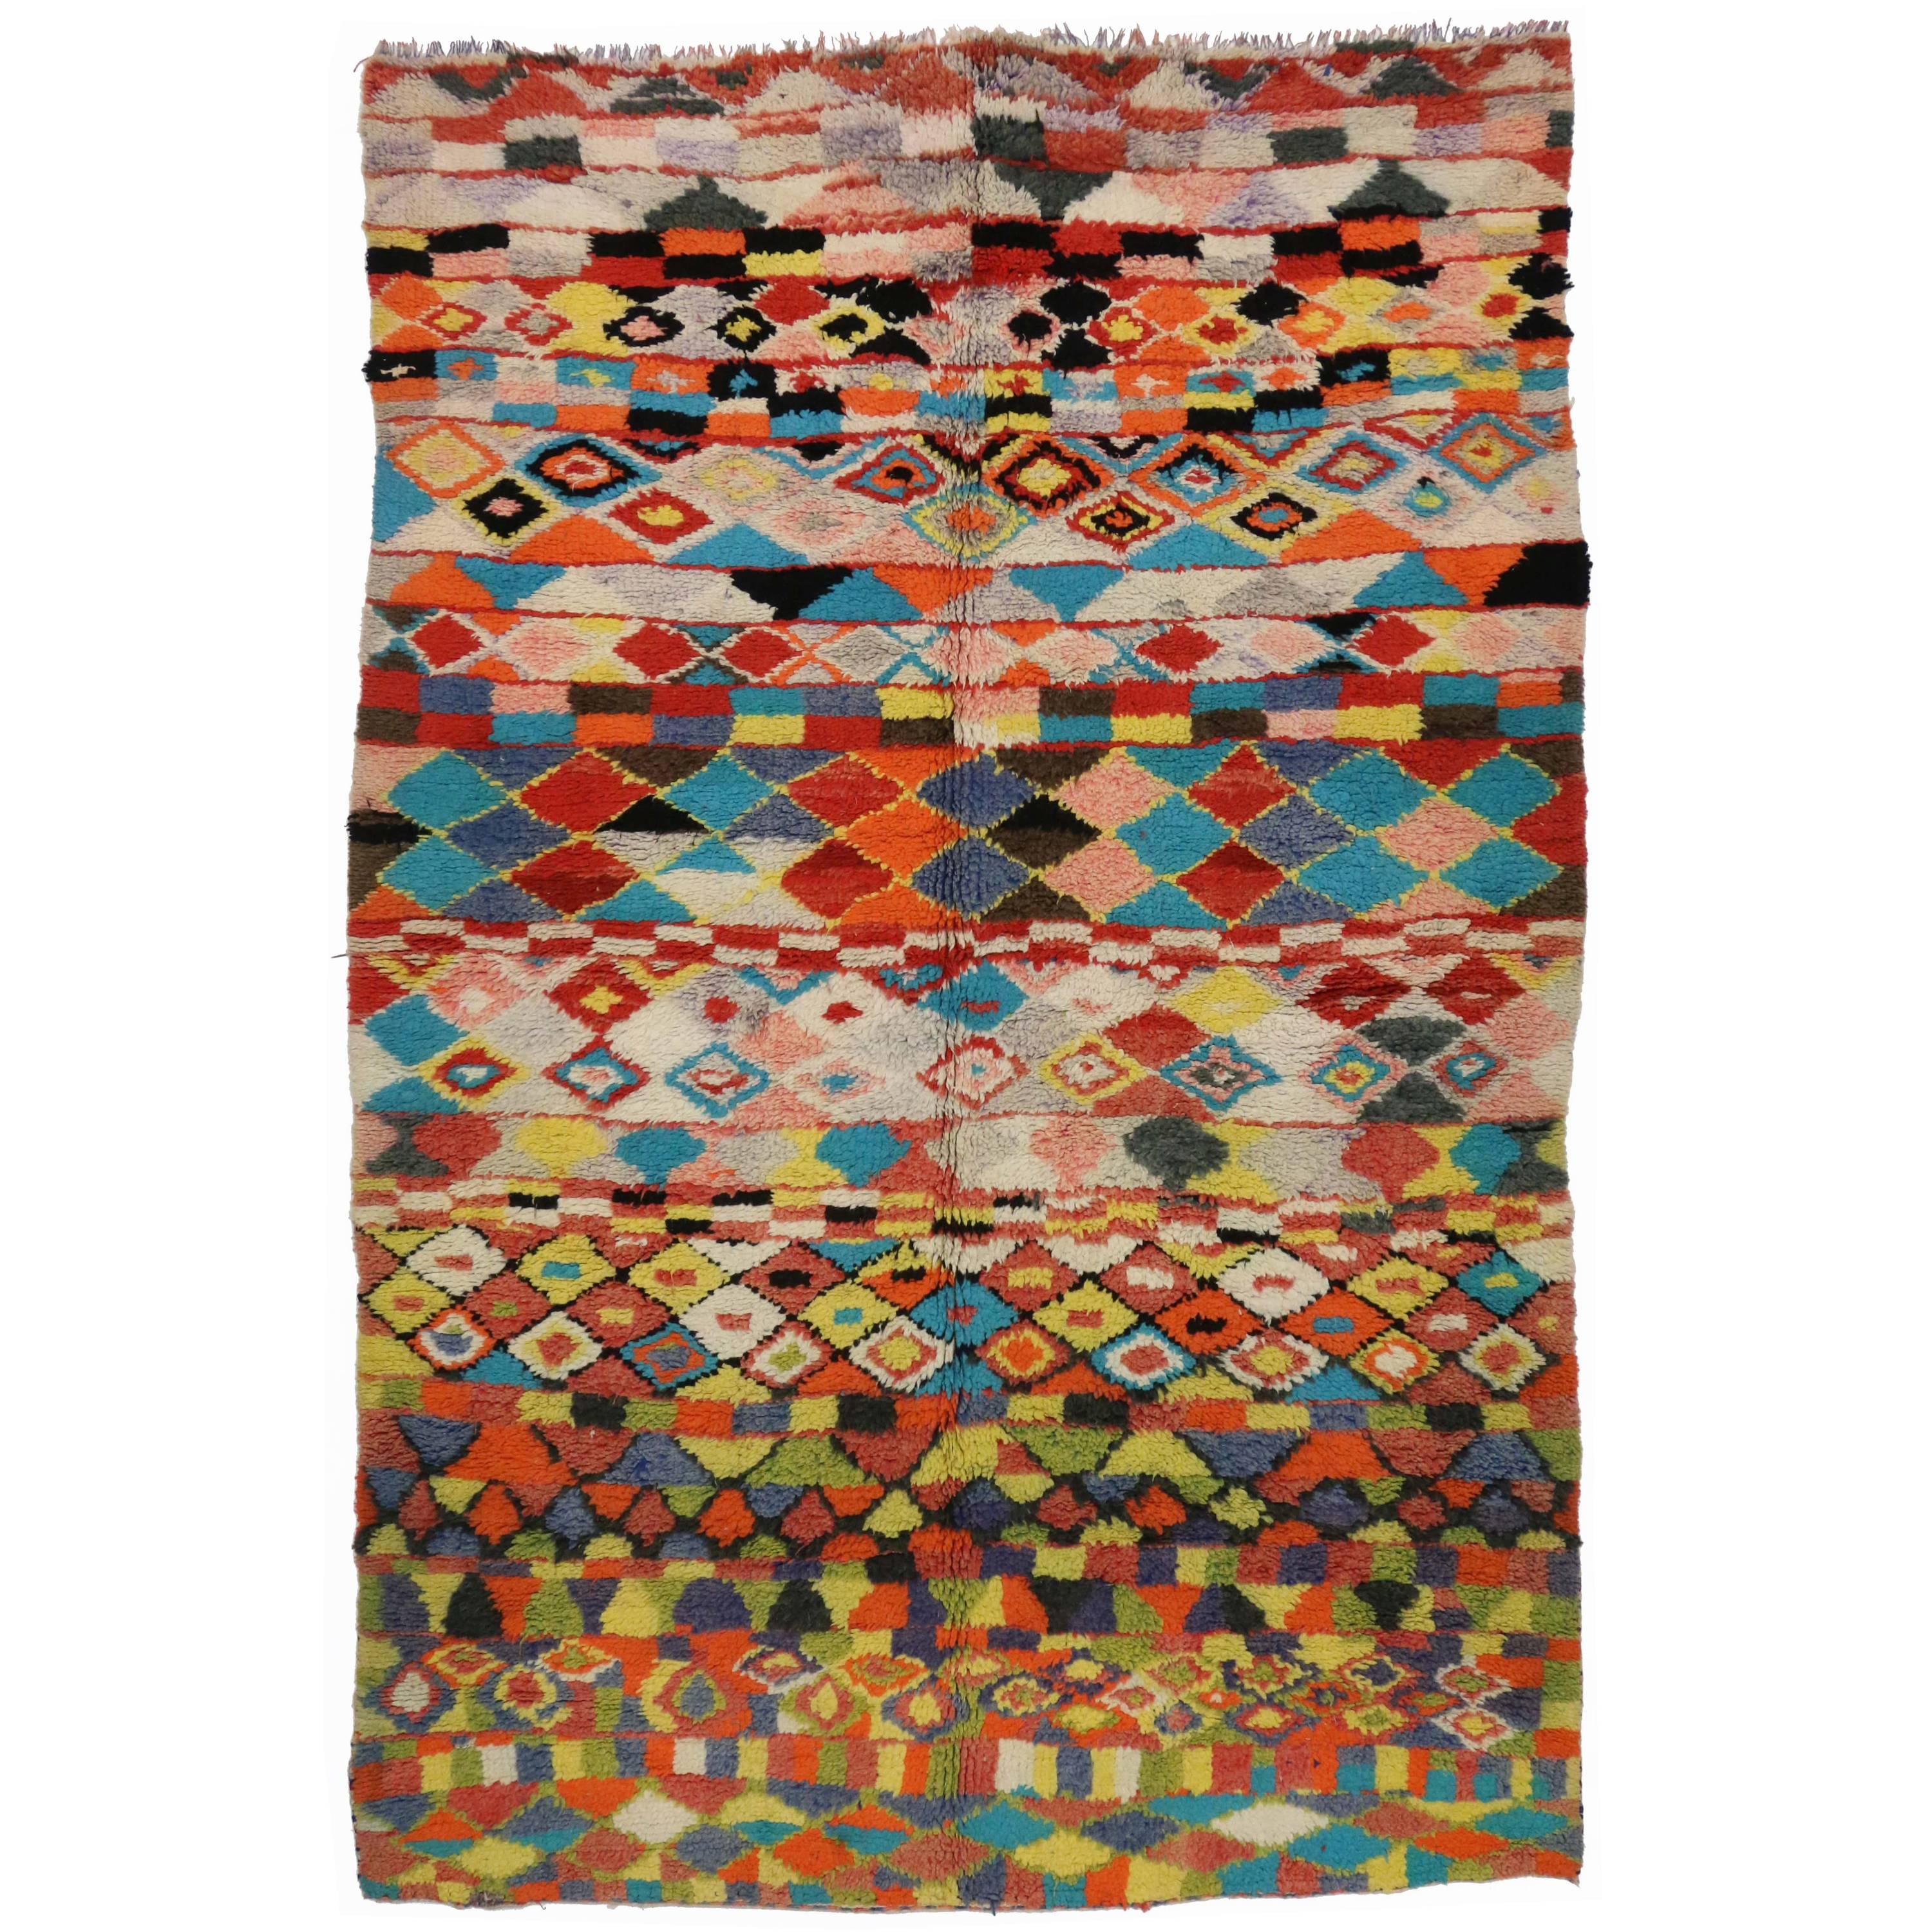 Vintage Moroccan Rug with Contemporary Abstract Design, Berber Moroccan Rug